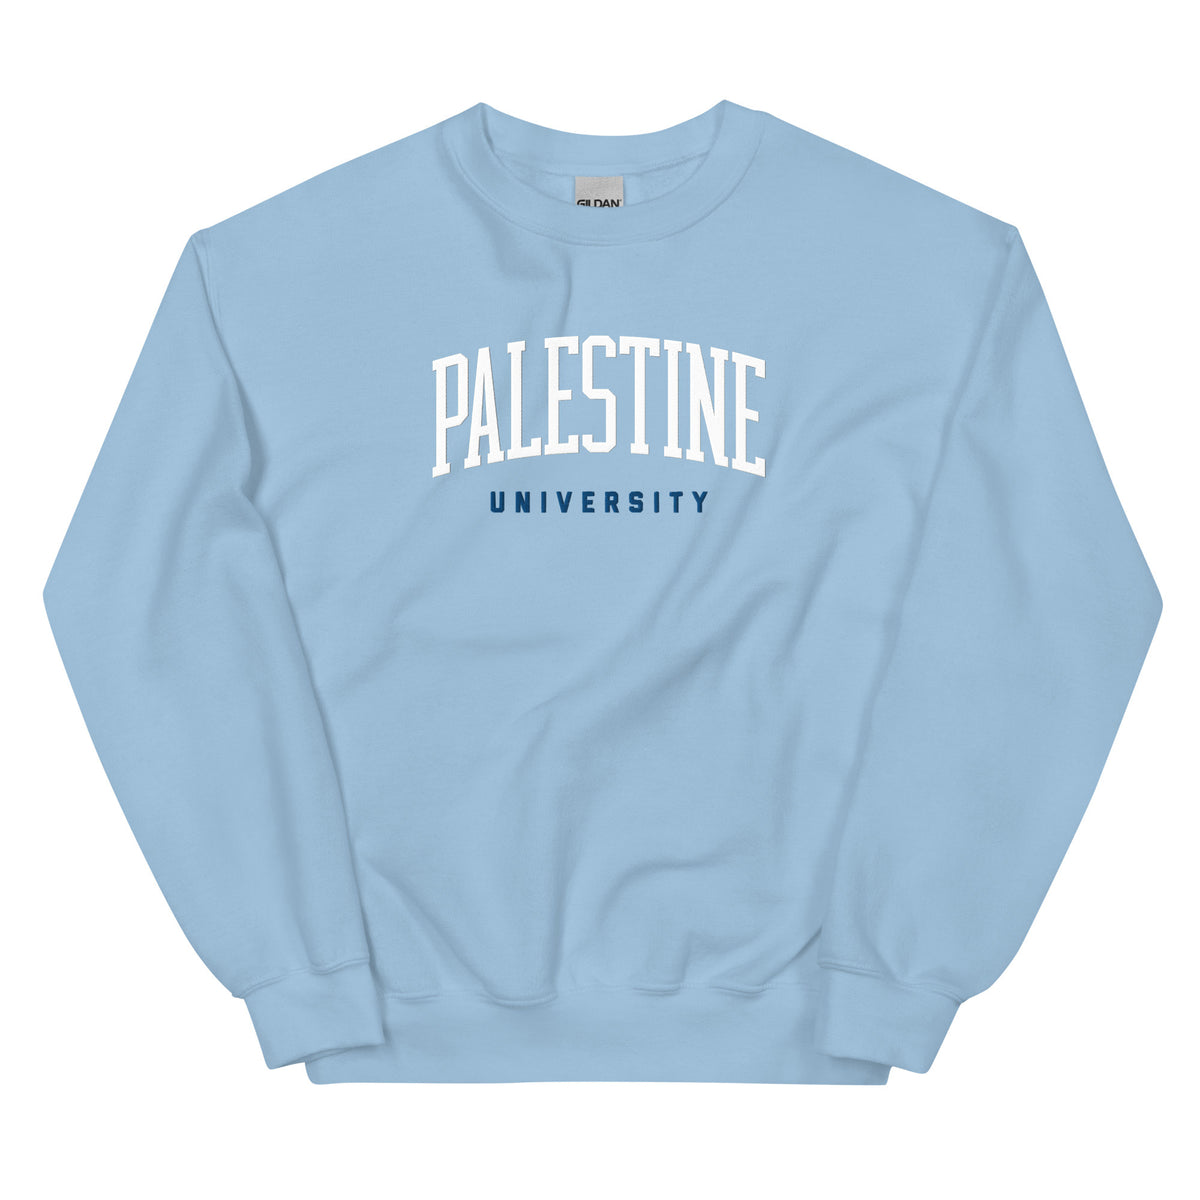 Palestine university sweatshirt in light blue by Dar Collective